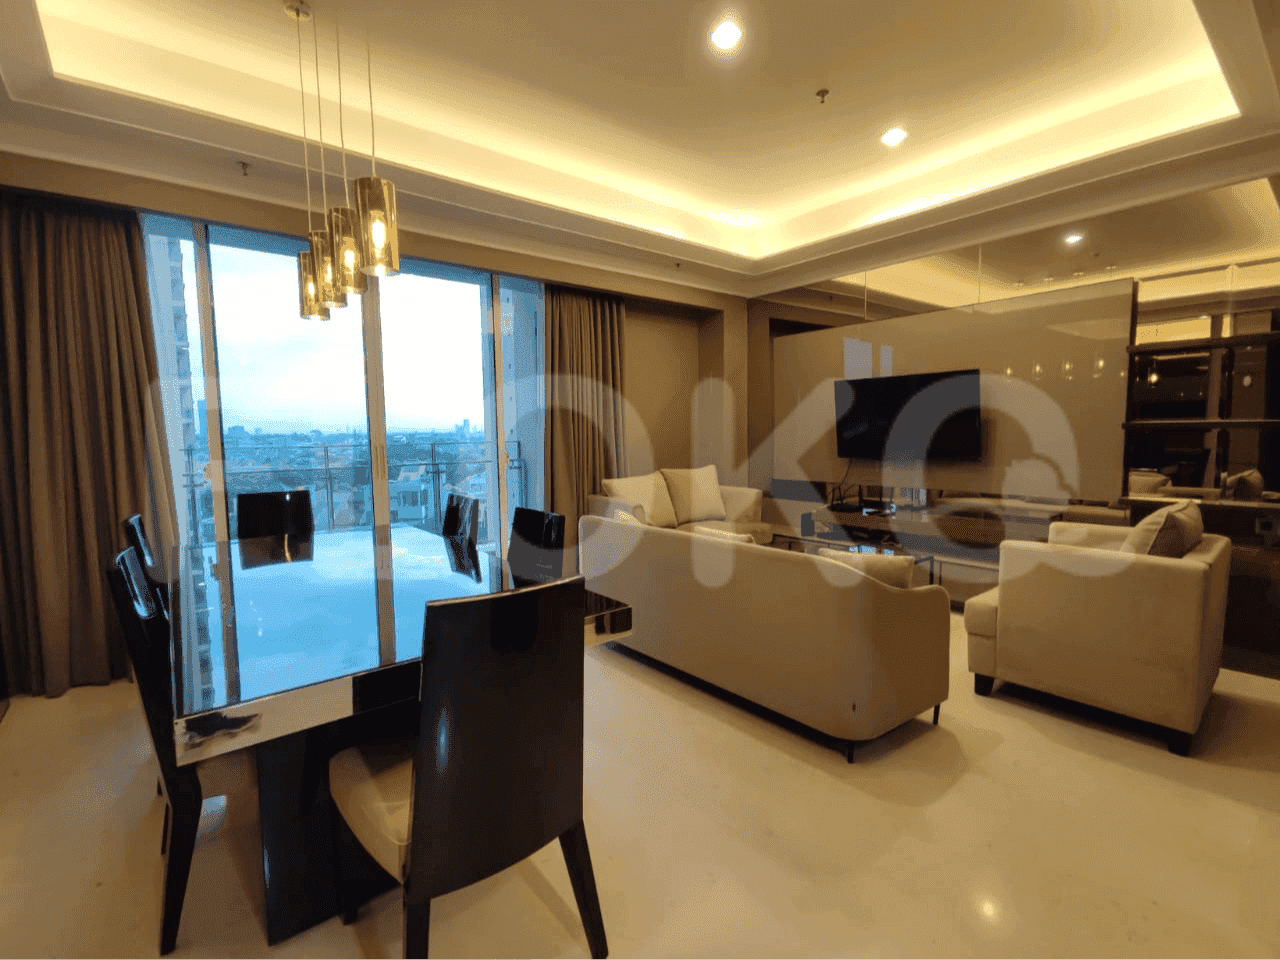 3 Bedroom on 8th Floor for Rent in Pondok Indah Residence - fpoac4 1